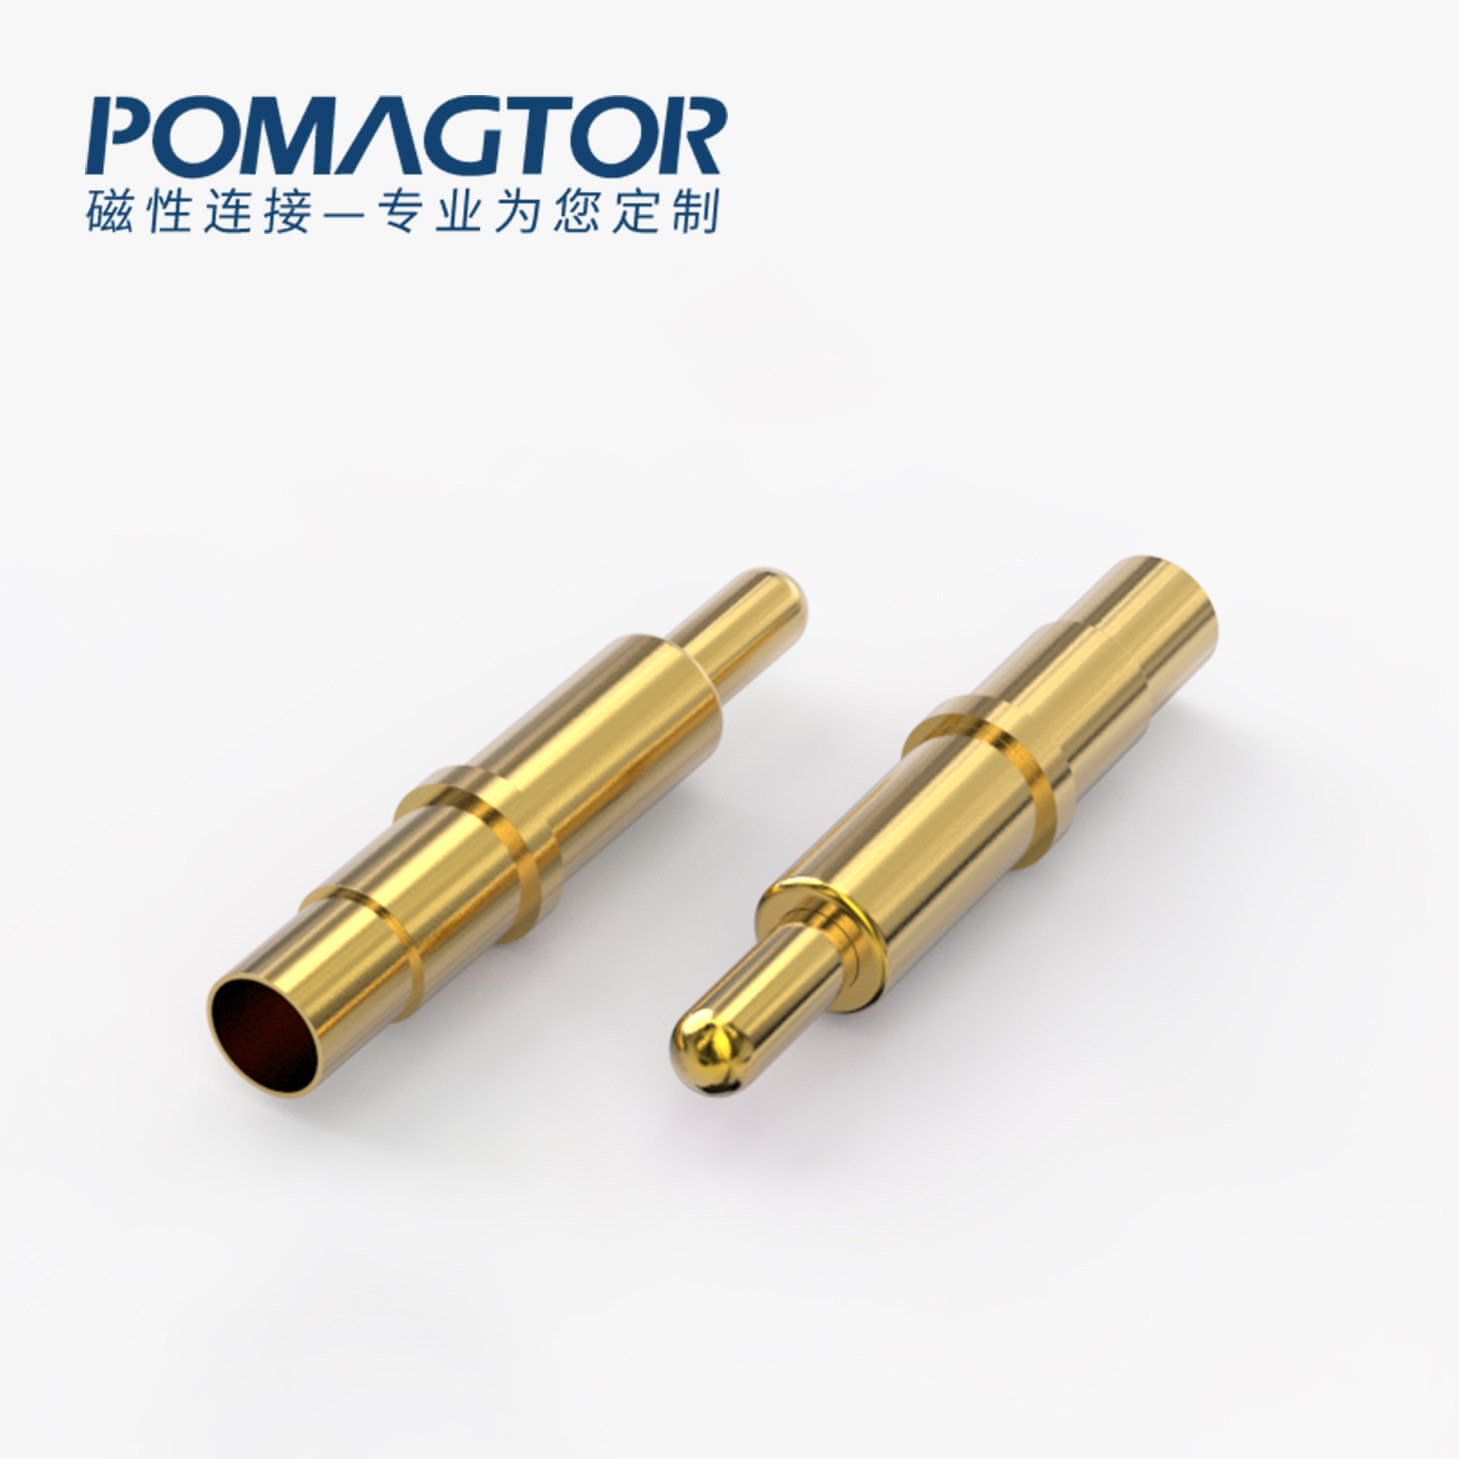 POGO PIN 焊线式：电镀黄铜Au10u，电压5V，电流2.5A，工作行程2.05mm:100±30gf，弹力1000000次+，工作温度-30°~85°